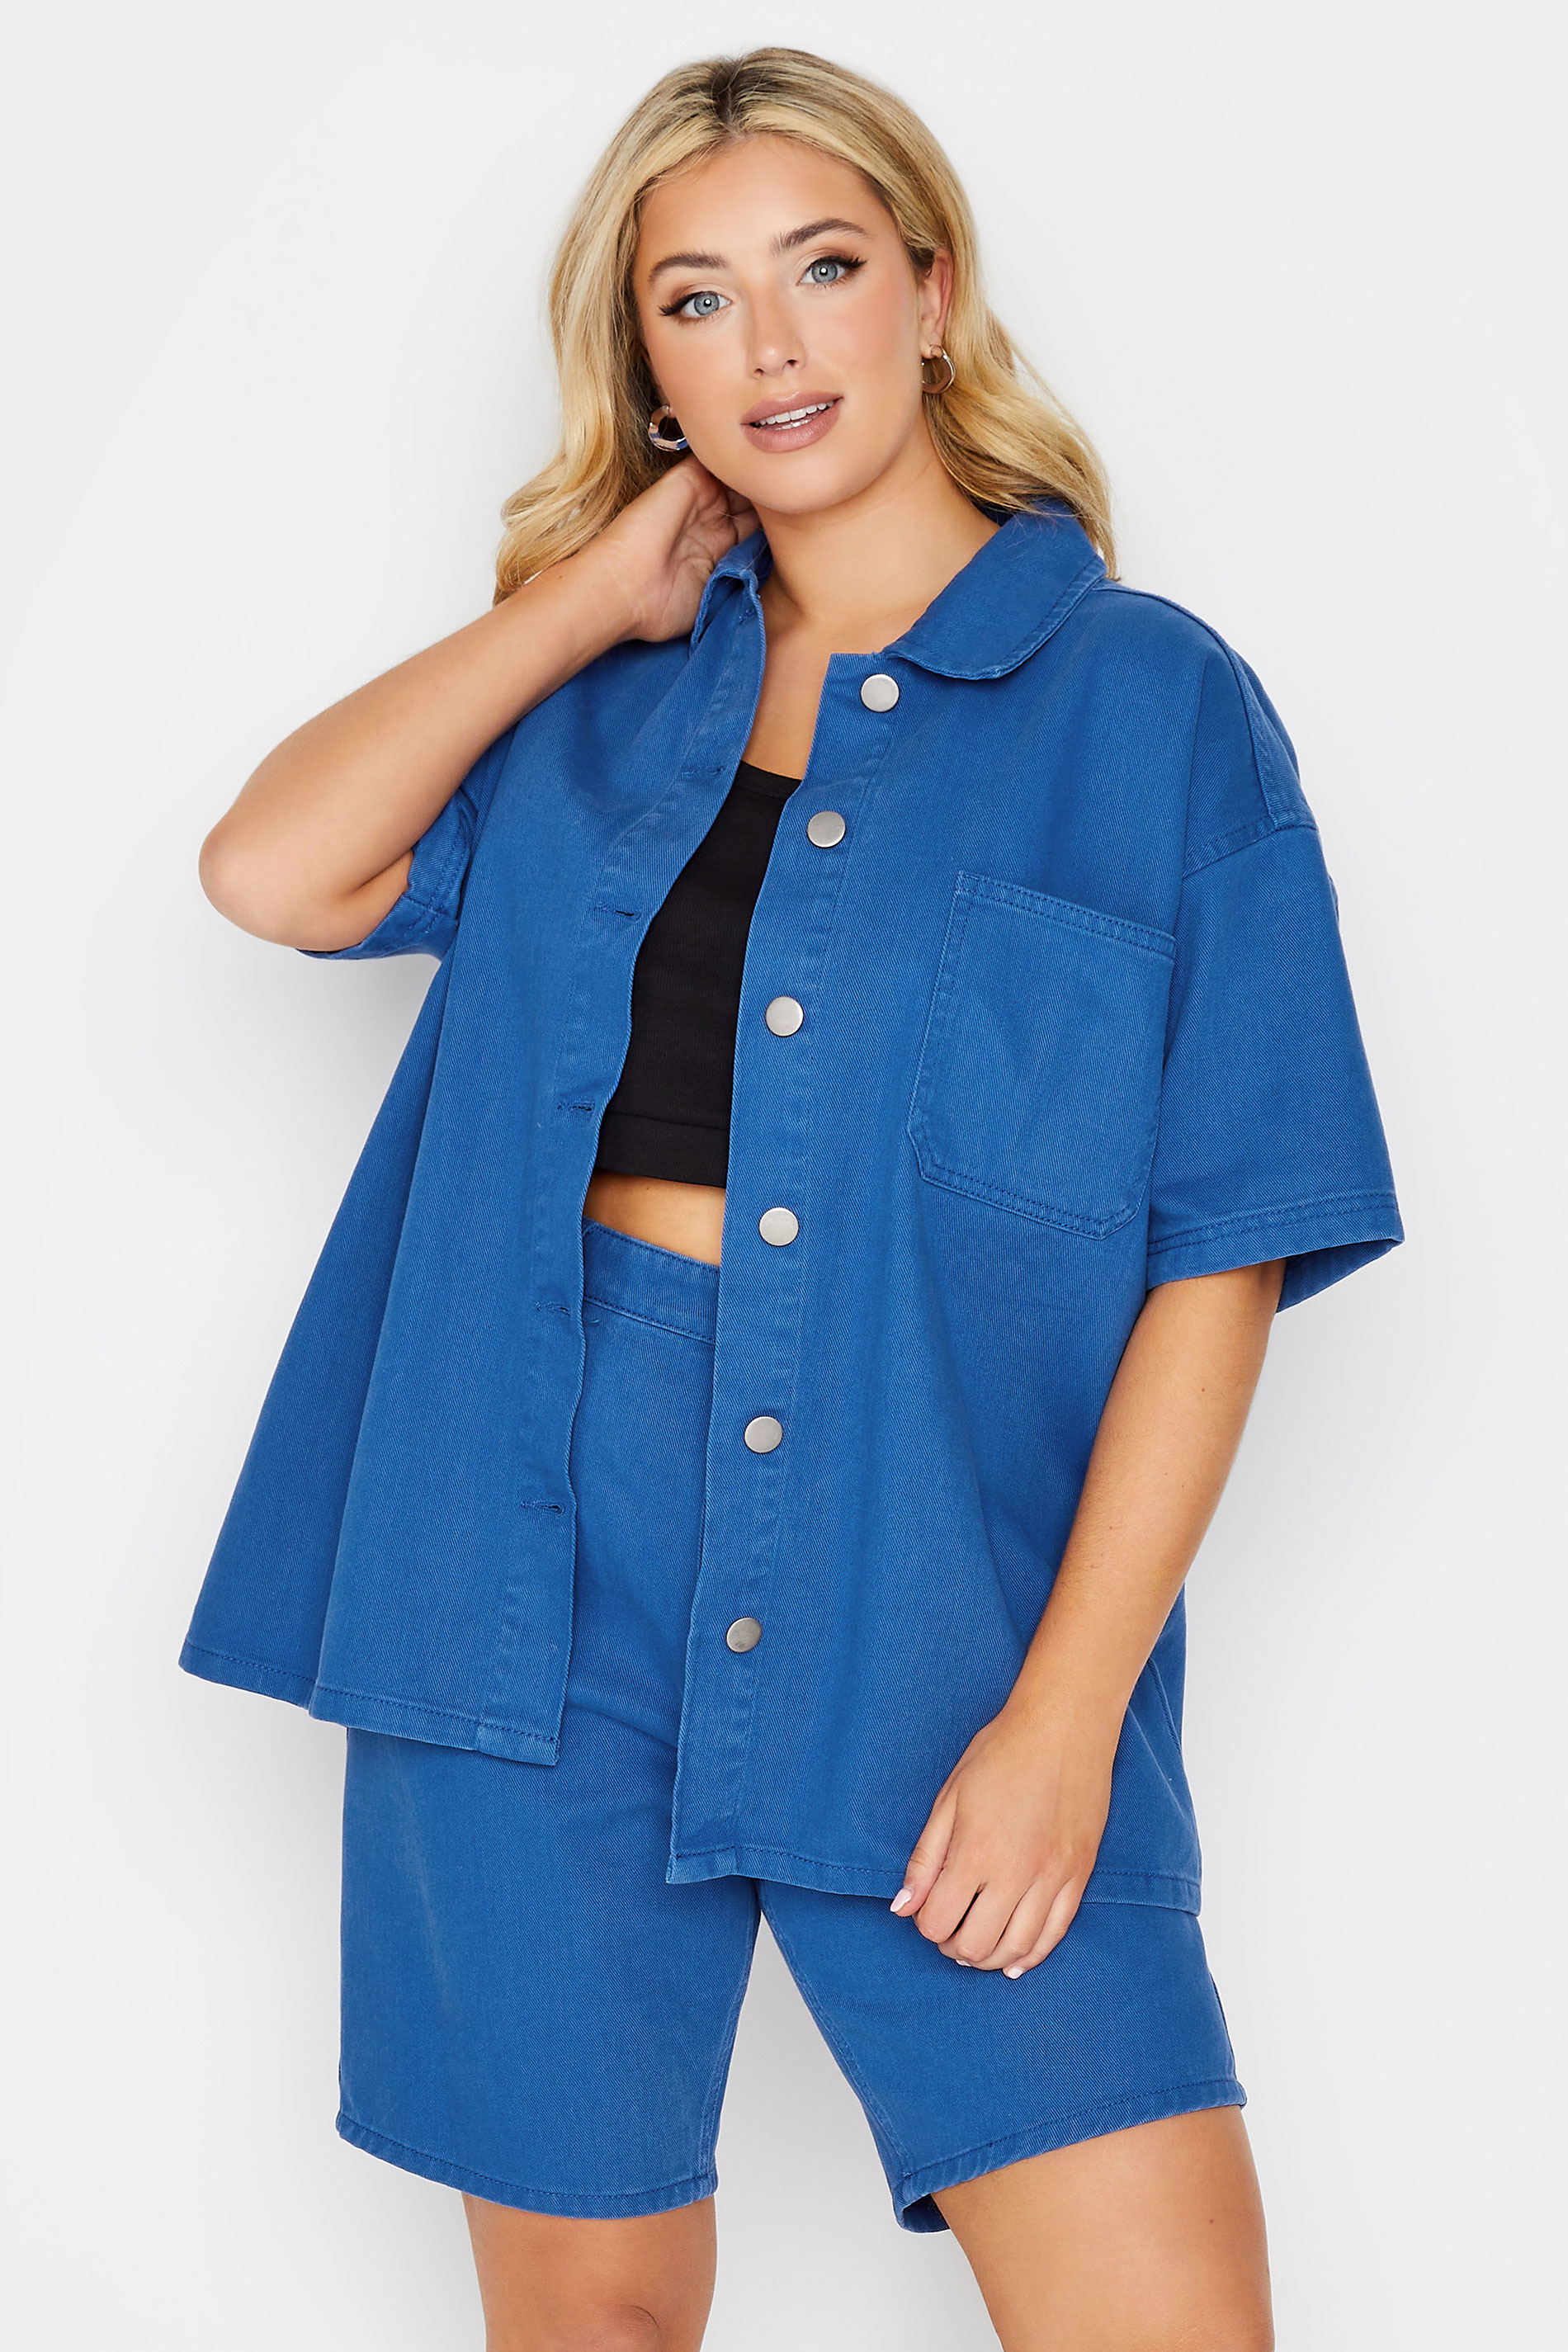 YOURS Plus Size Cobalt Blue Denim Shirt | Yours Clothing 1